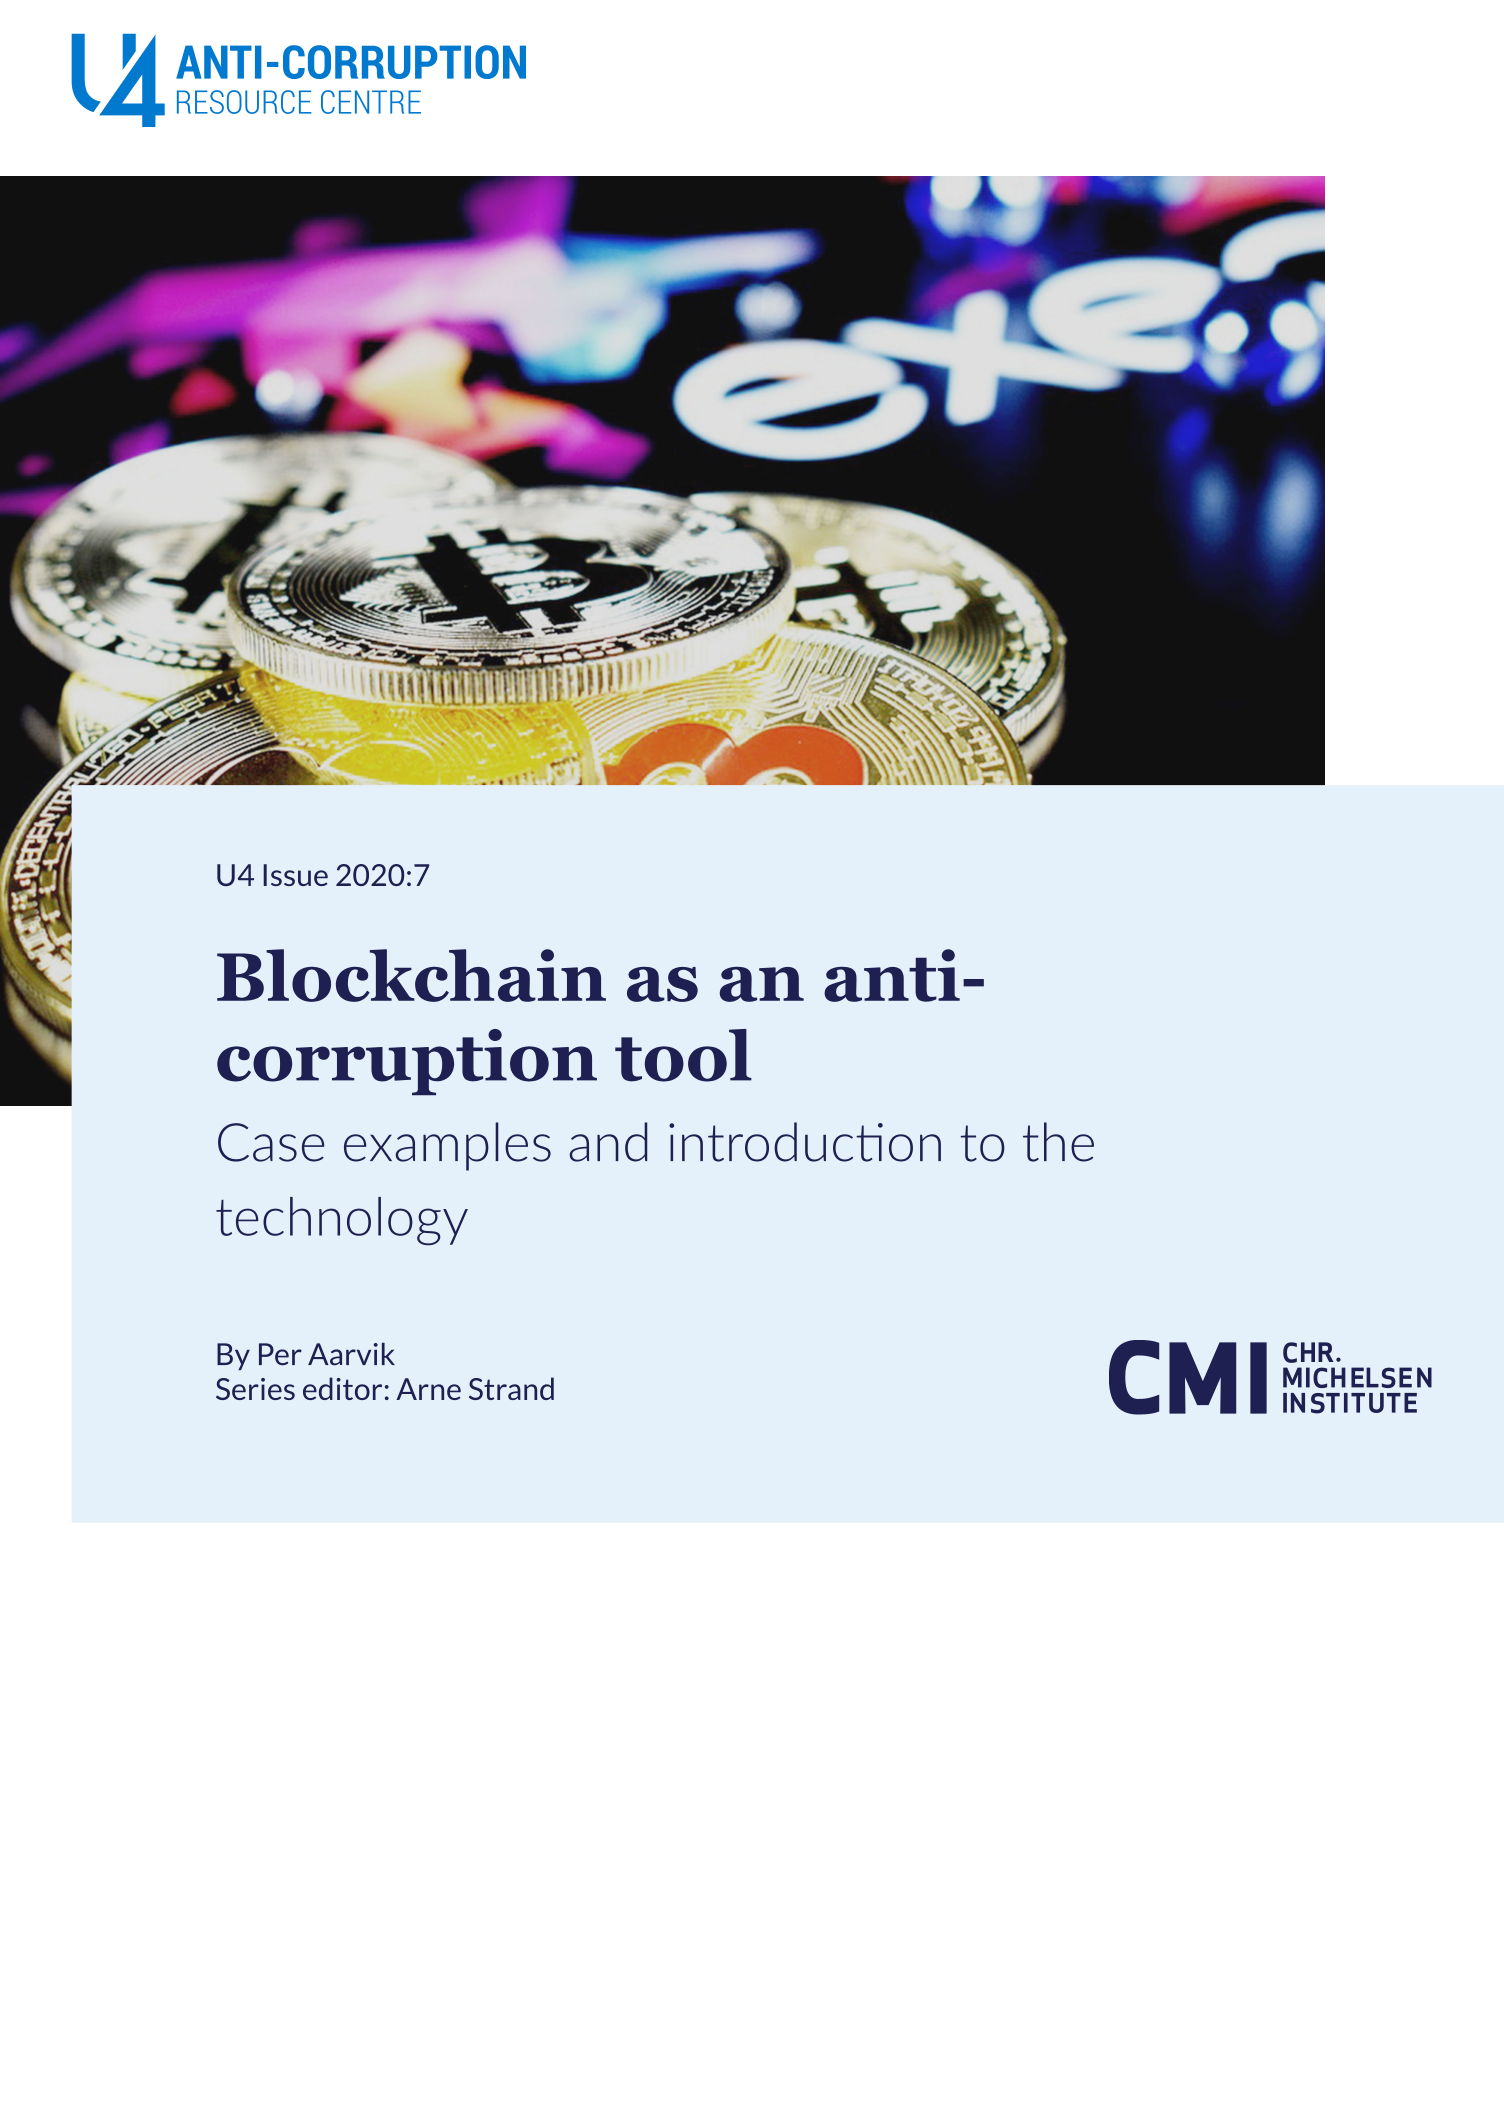 Blockchain as an anti-corruption tool